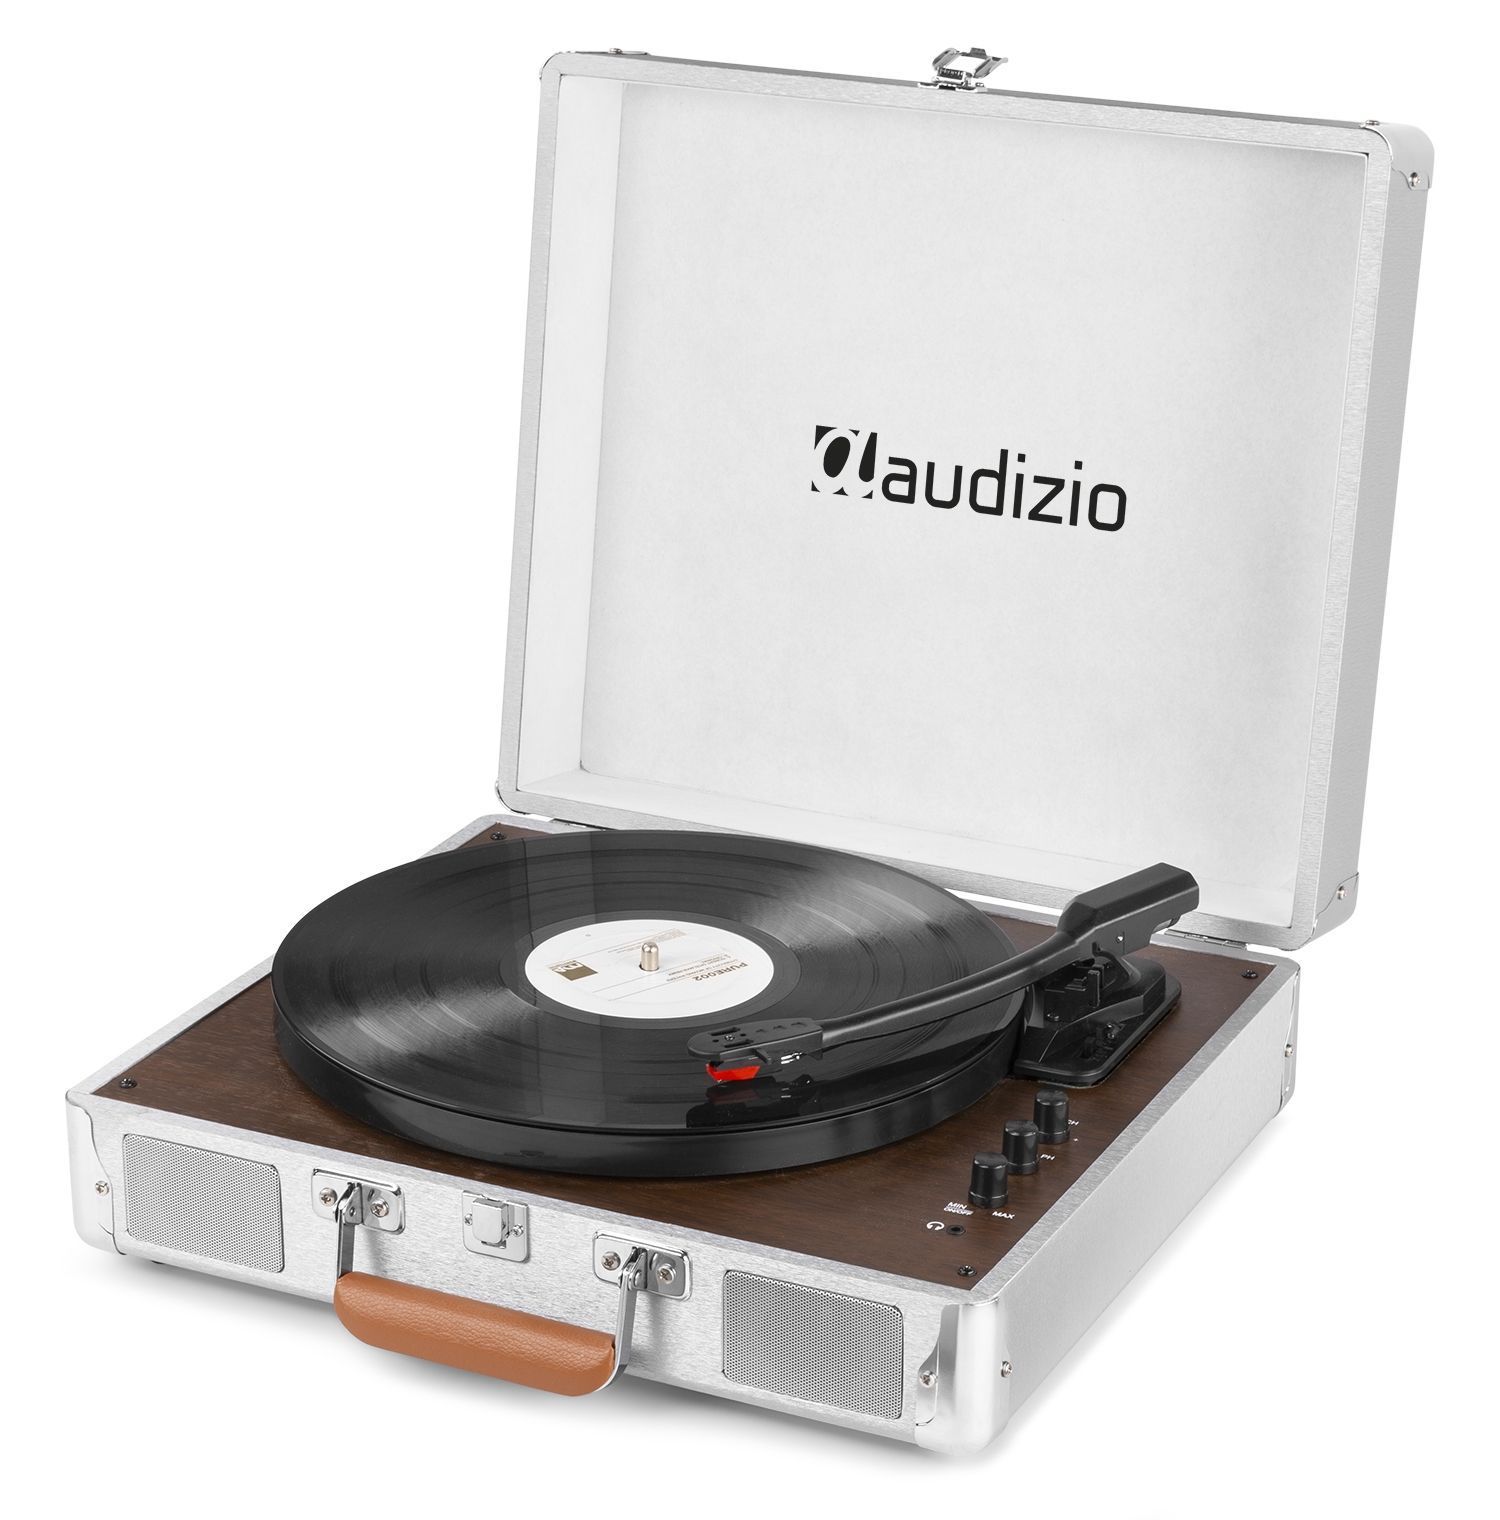 Audizio RP320 skivspelare med Bluetooth i aluminiumhölje